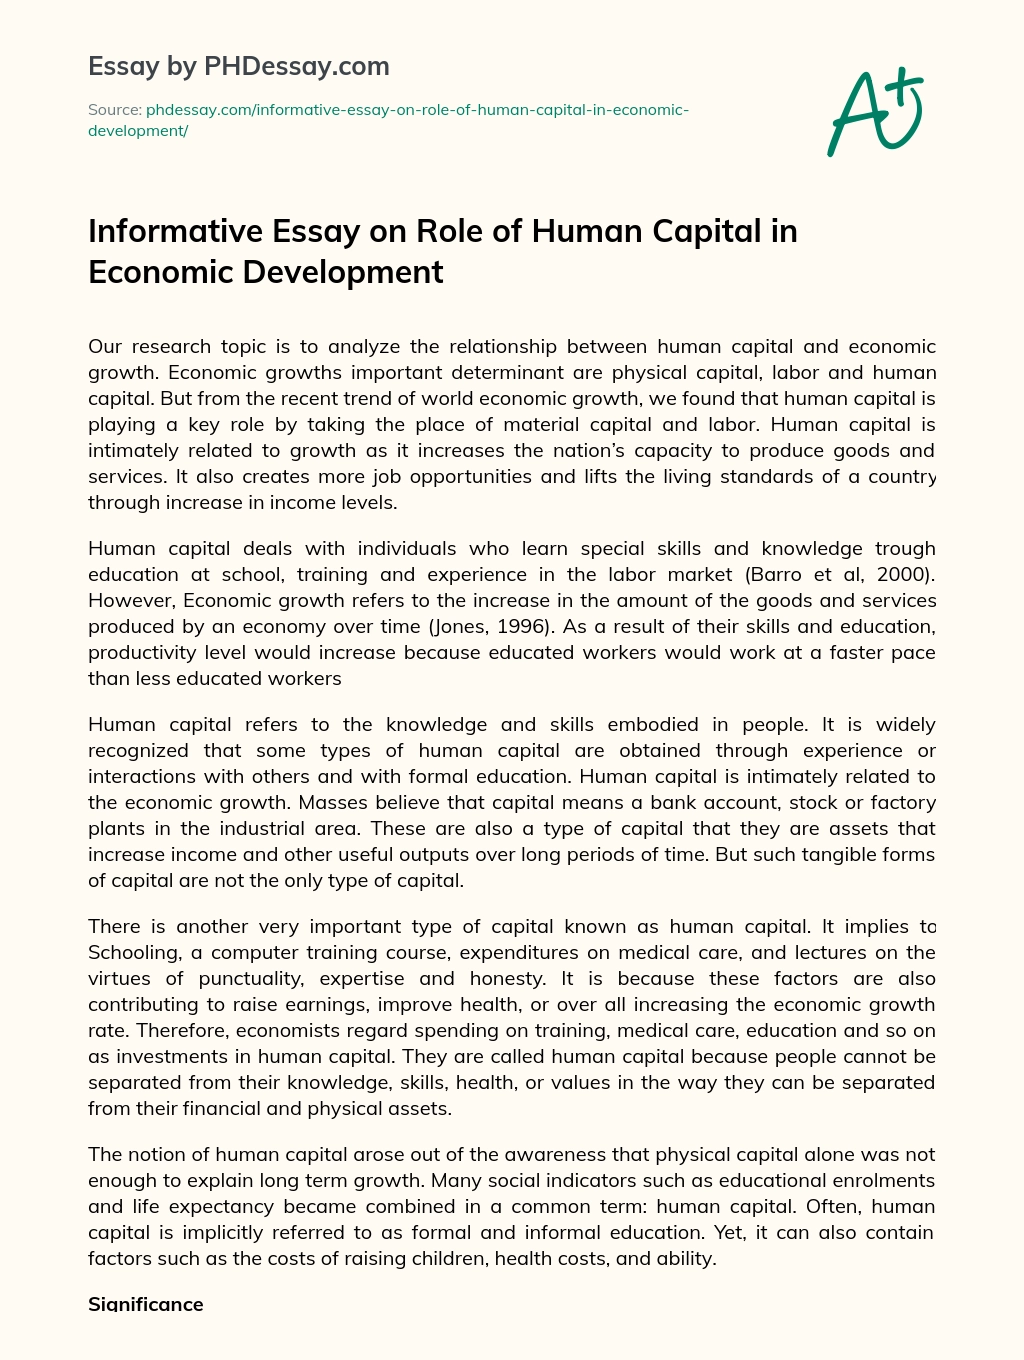 essay on human capital formation